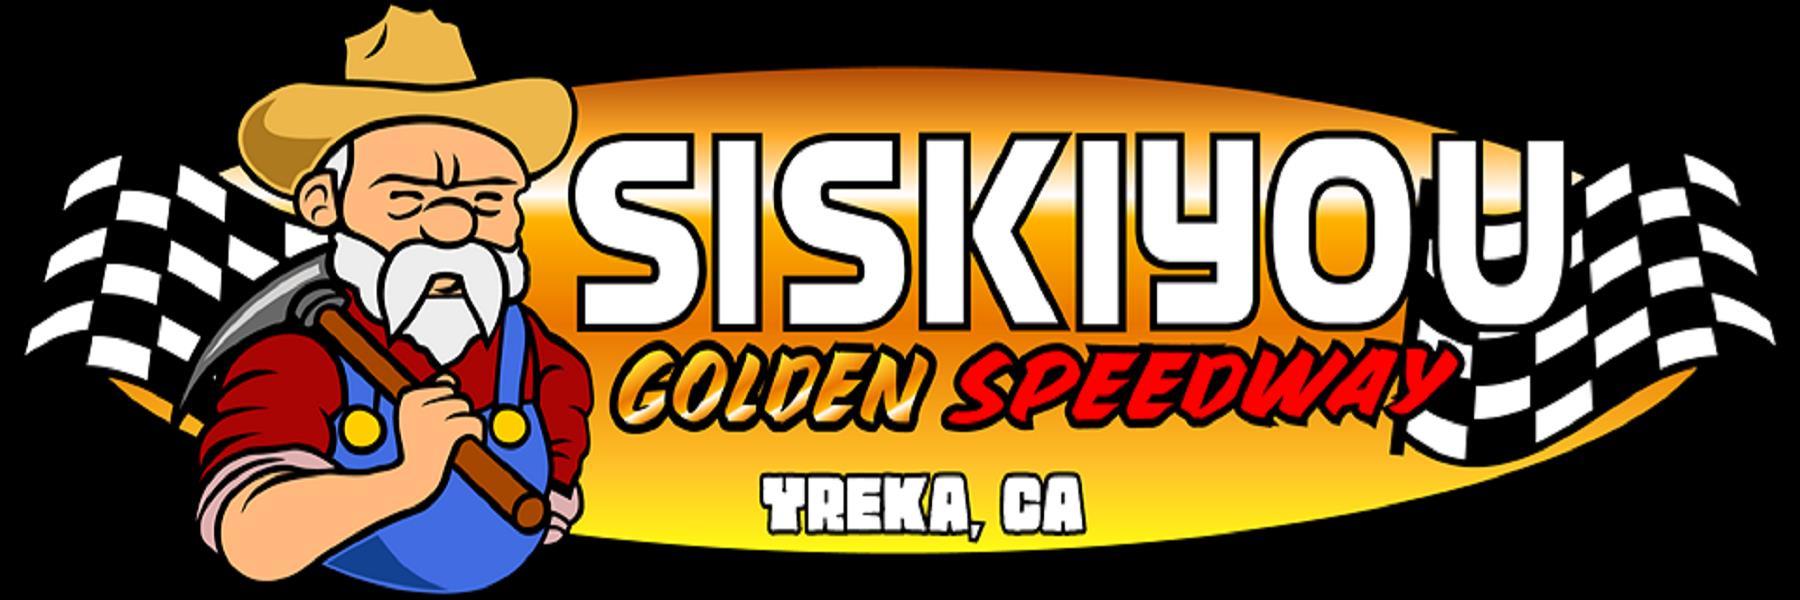 5/20/2022 - Siskiyou Golden Speedway